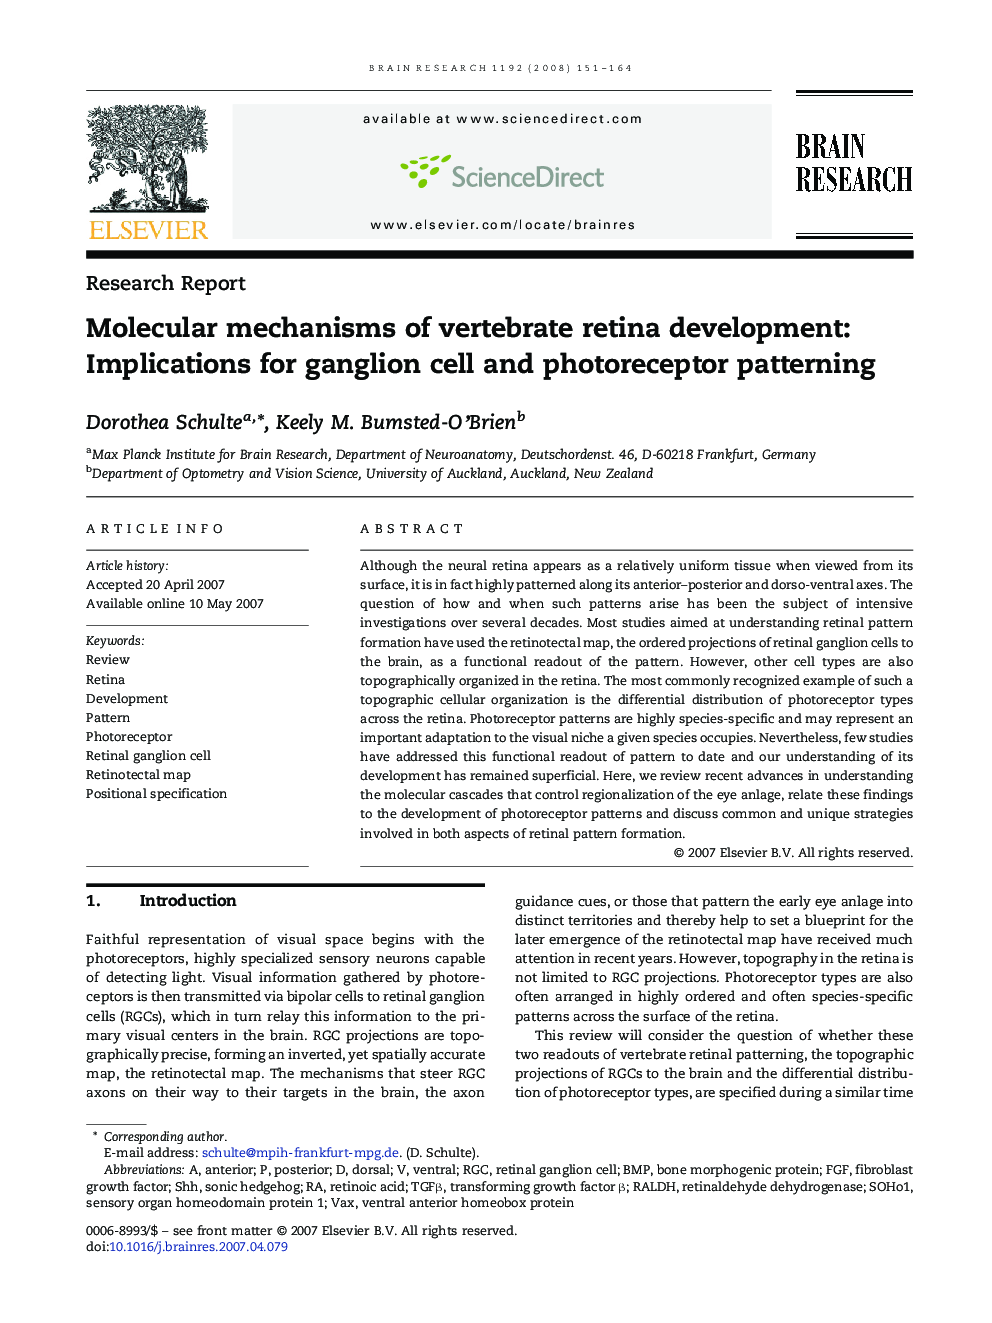 Molecular mechanisms of vertebrate retina development: Implications for ganglion cell and photoreceptor patterning